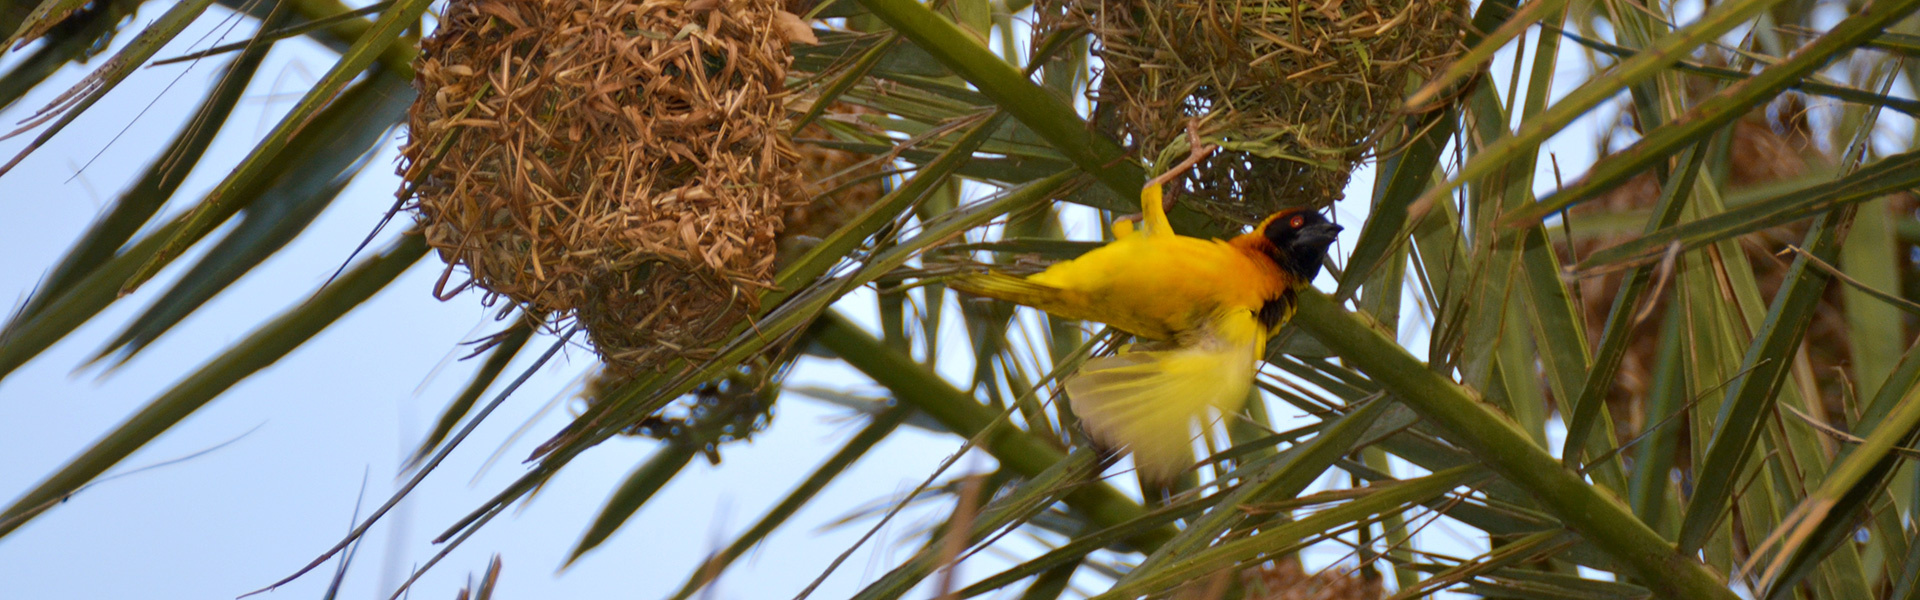 south-sudan-yellow-bird-nests